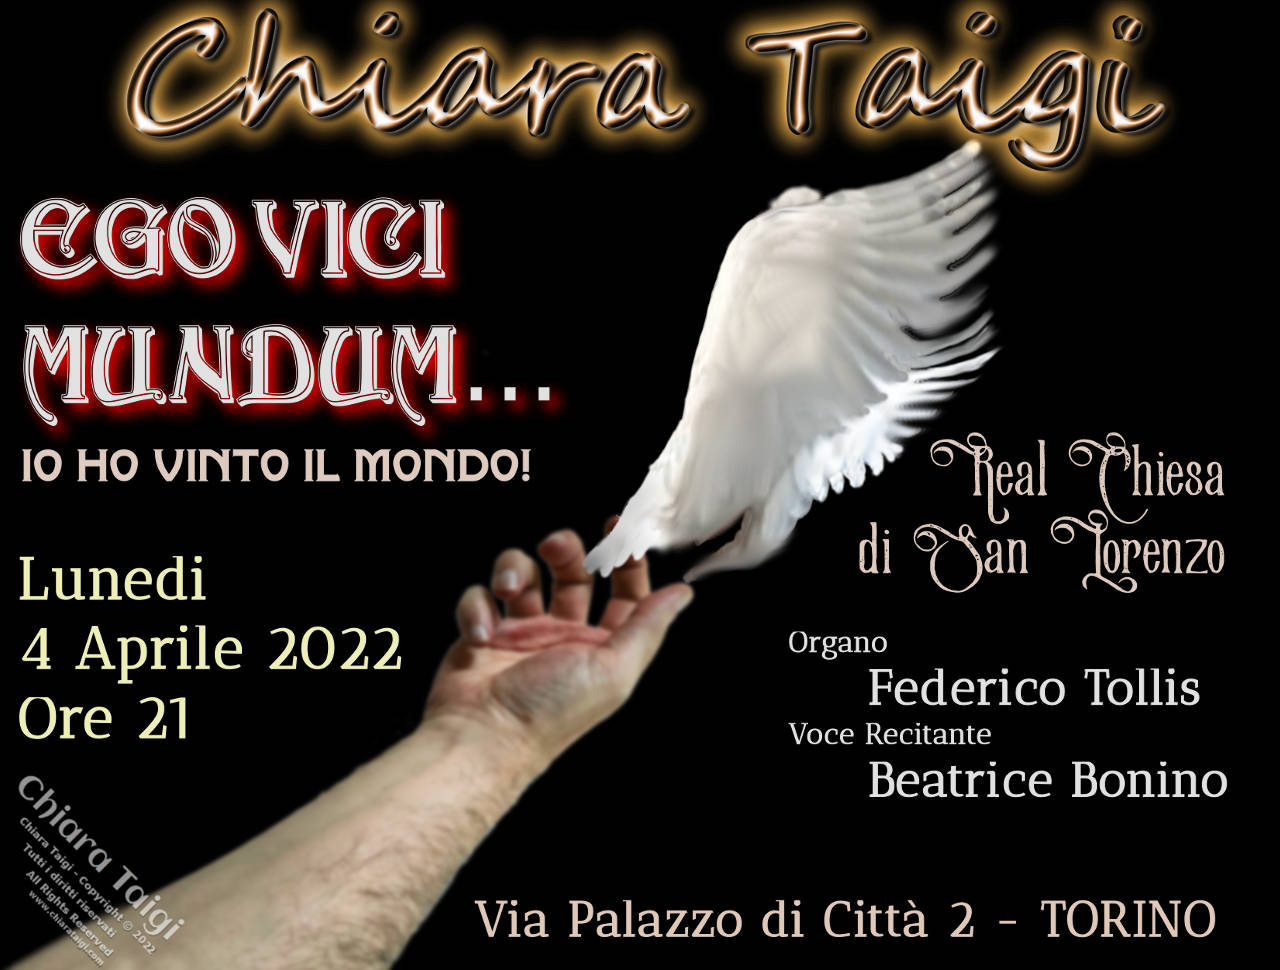 CHIARA TAIGI - Evento musicale EGO Vici Mundum - Lunedì 4 aprile 2022 ore 21 - Chiesa di San Lorenzo - Torino - Appuntamento